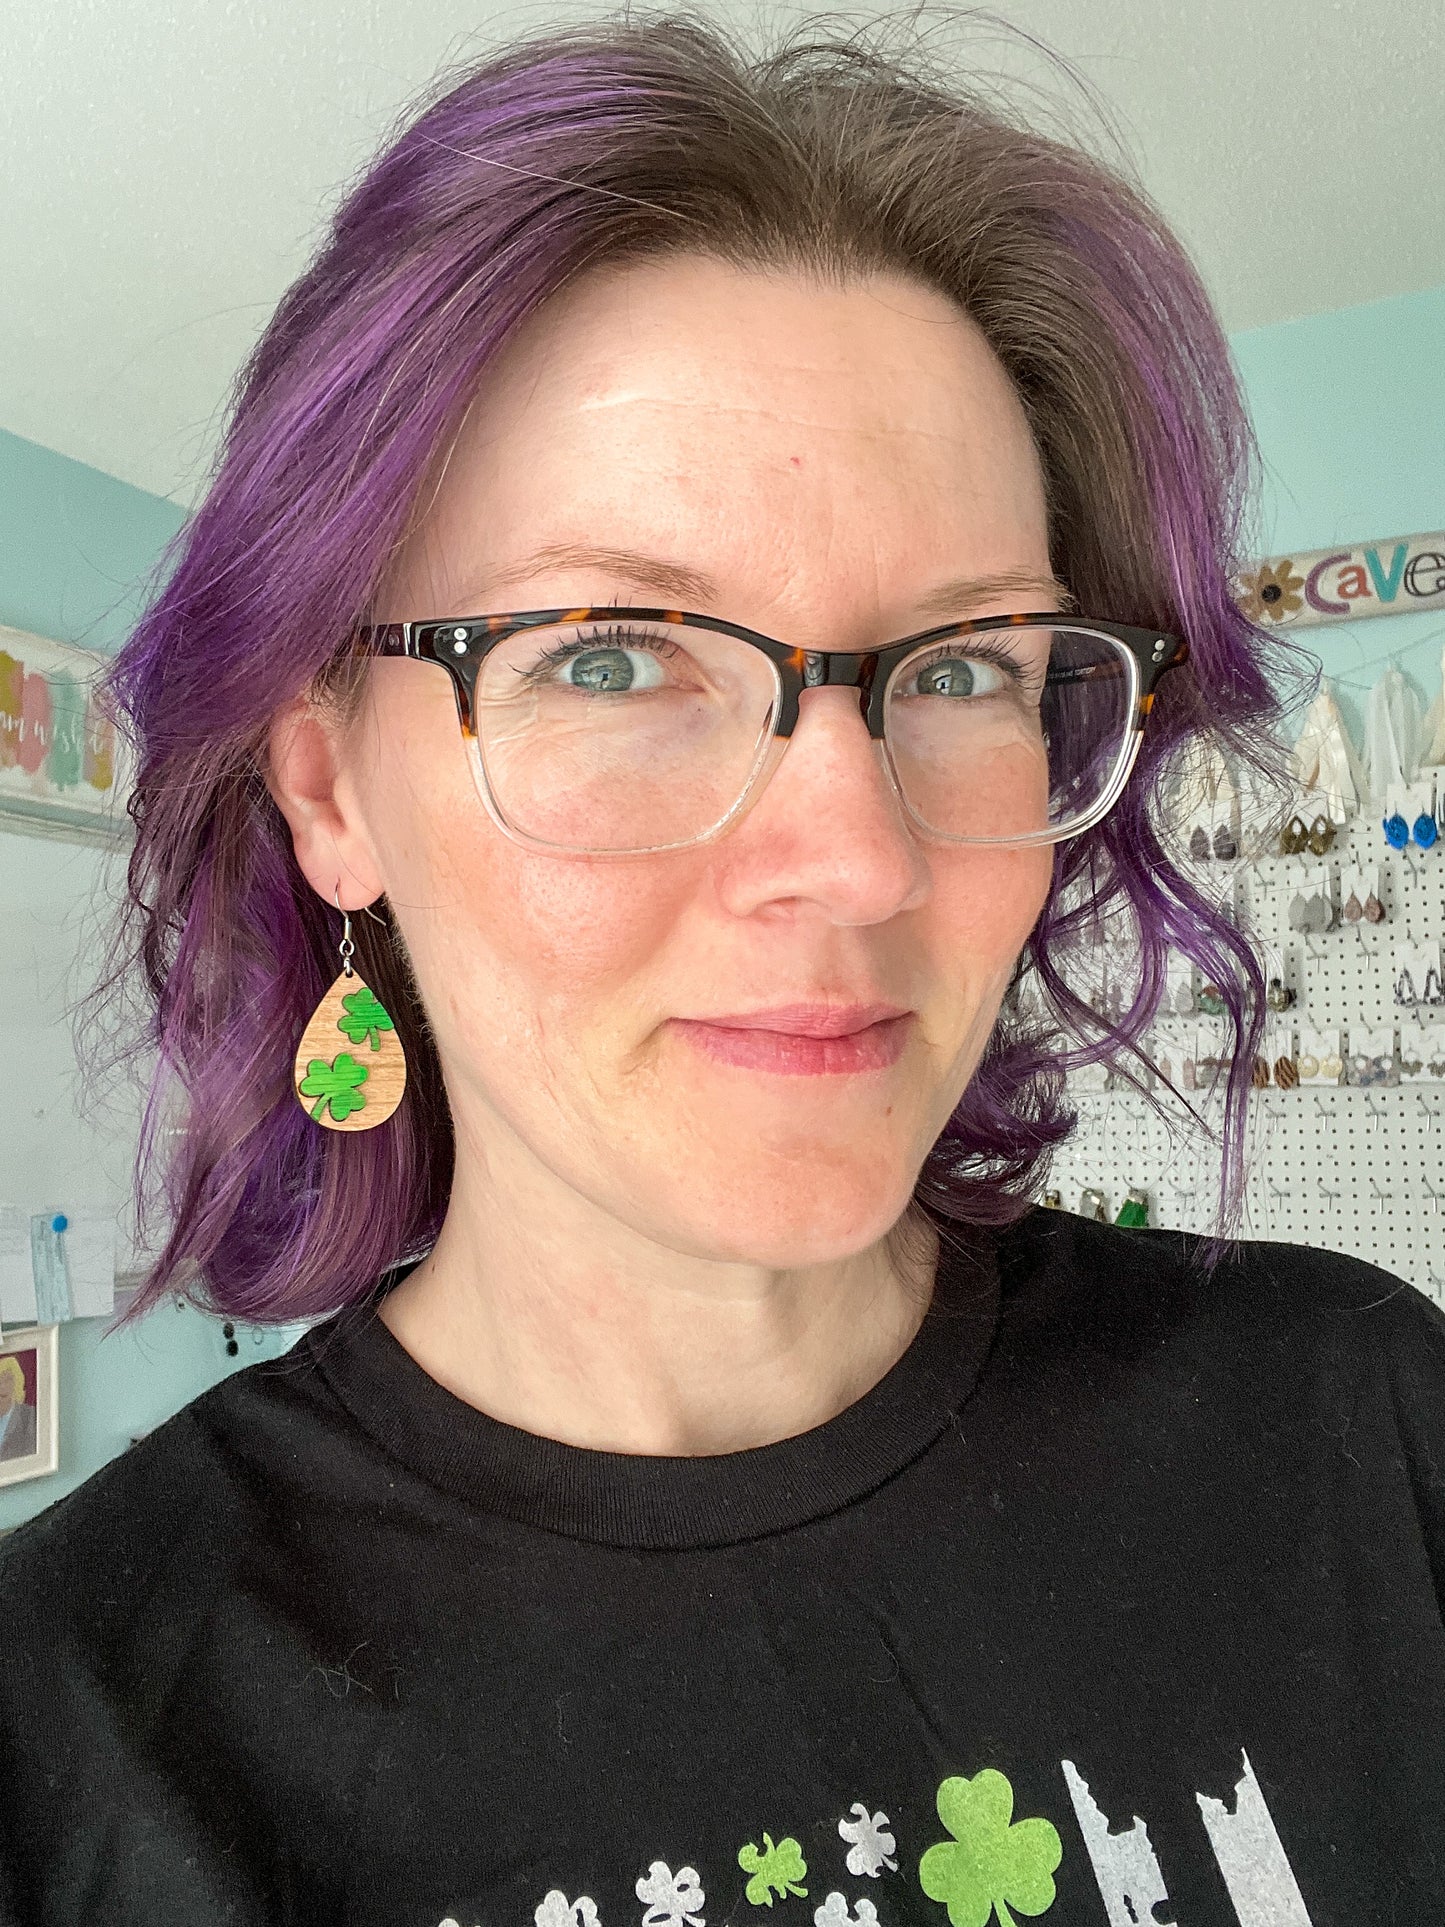 Clover Teardrop Hand Painted Wood Earrings: Choose From 2 Styles